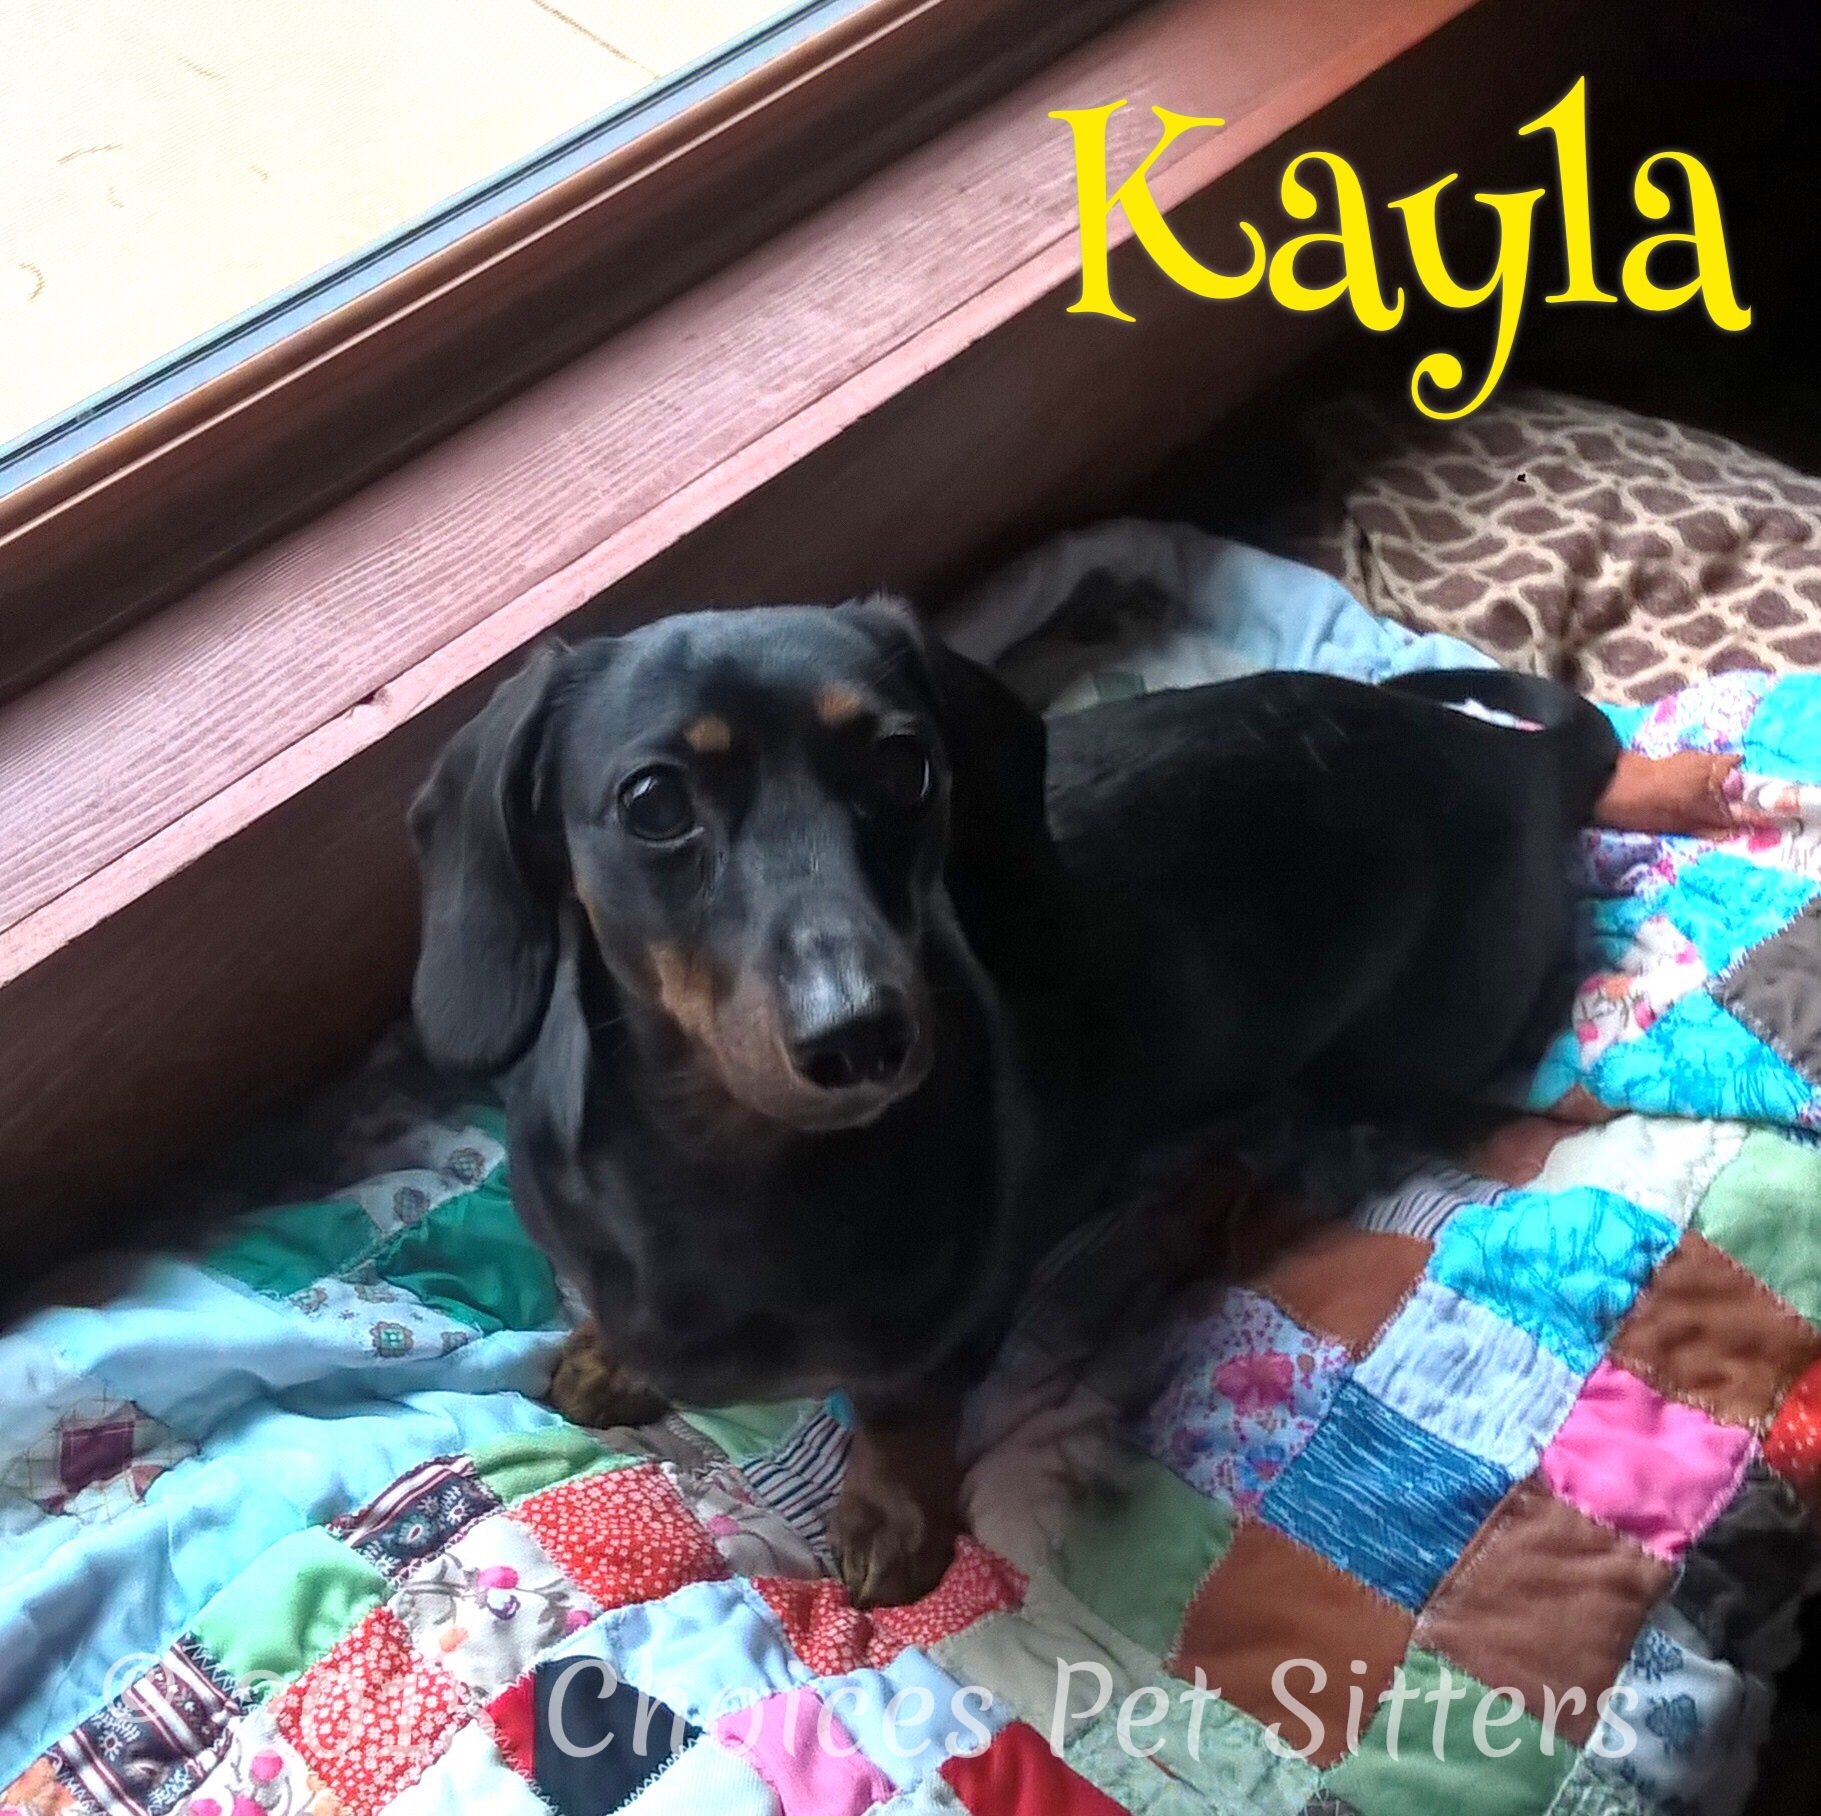 Choices Pet Sitters - Kayla